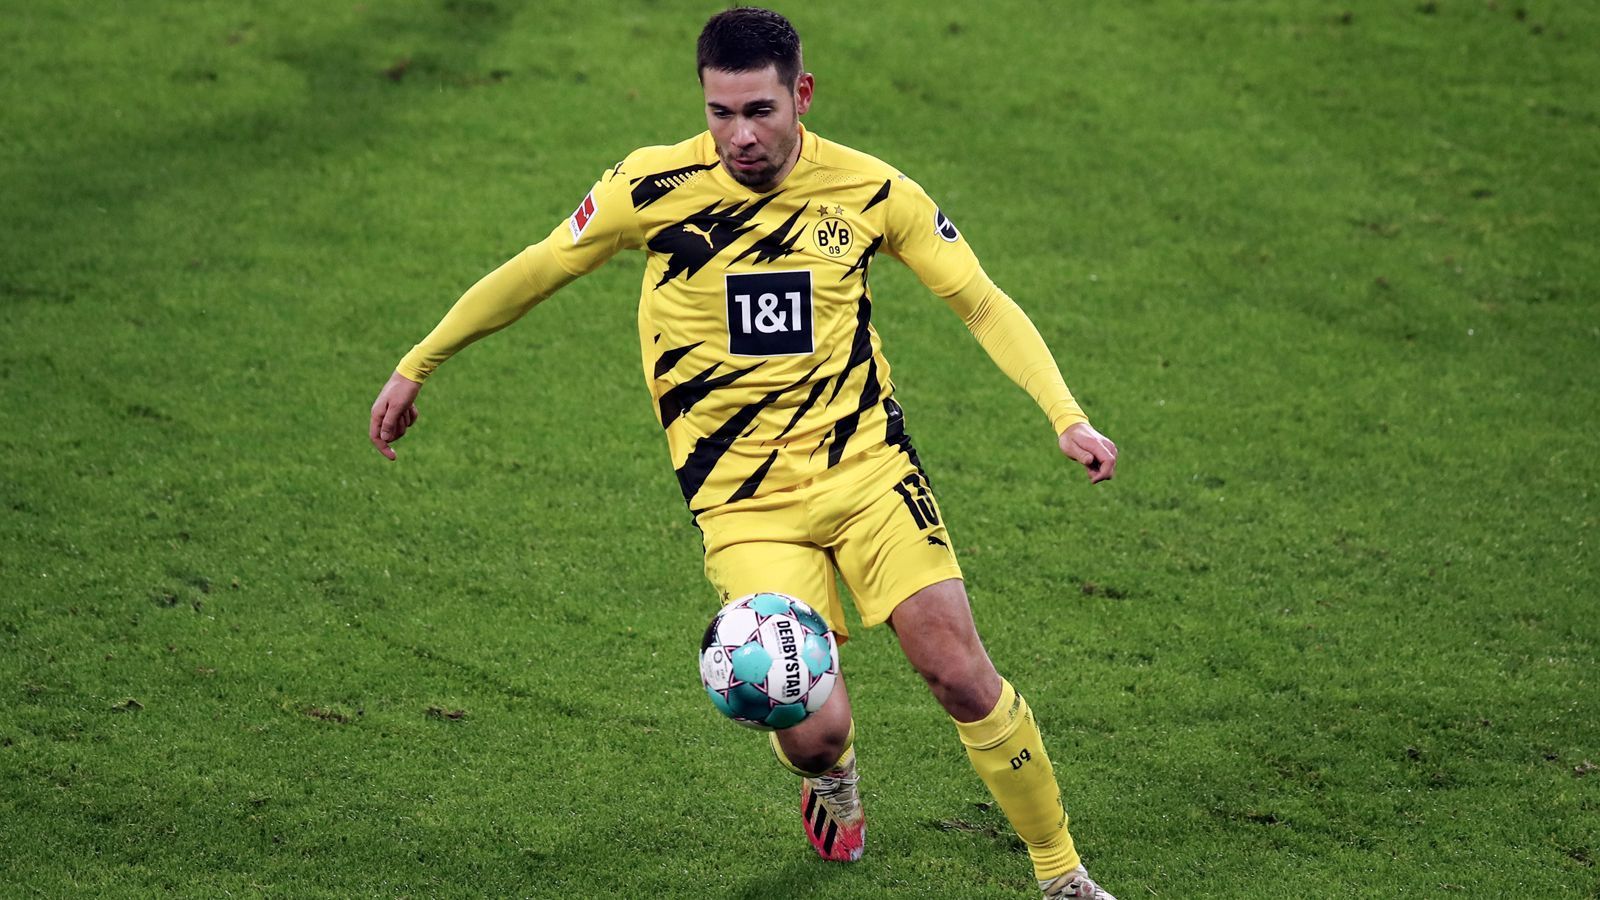 
                <strong>Mittelfeld: Raphael Guerreiro (Borussia Dortmund)</strong><br>
                Gesamtstärke in FIFA 21: 84 - Alter: 27 Jahre - Nationalität: Portugal
              